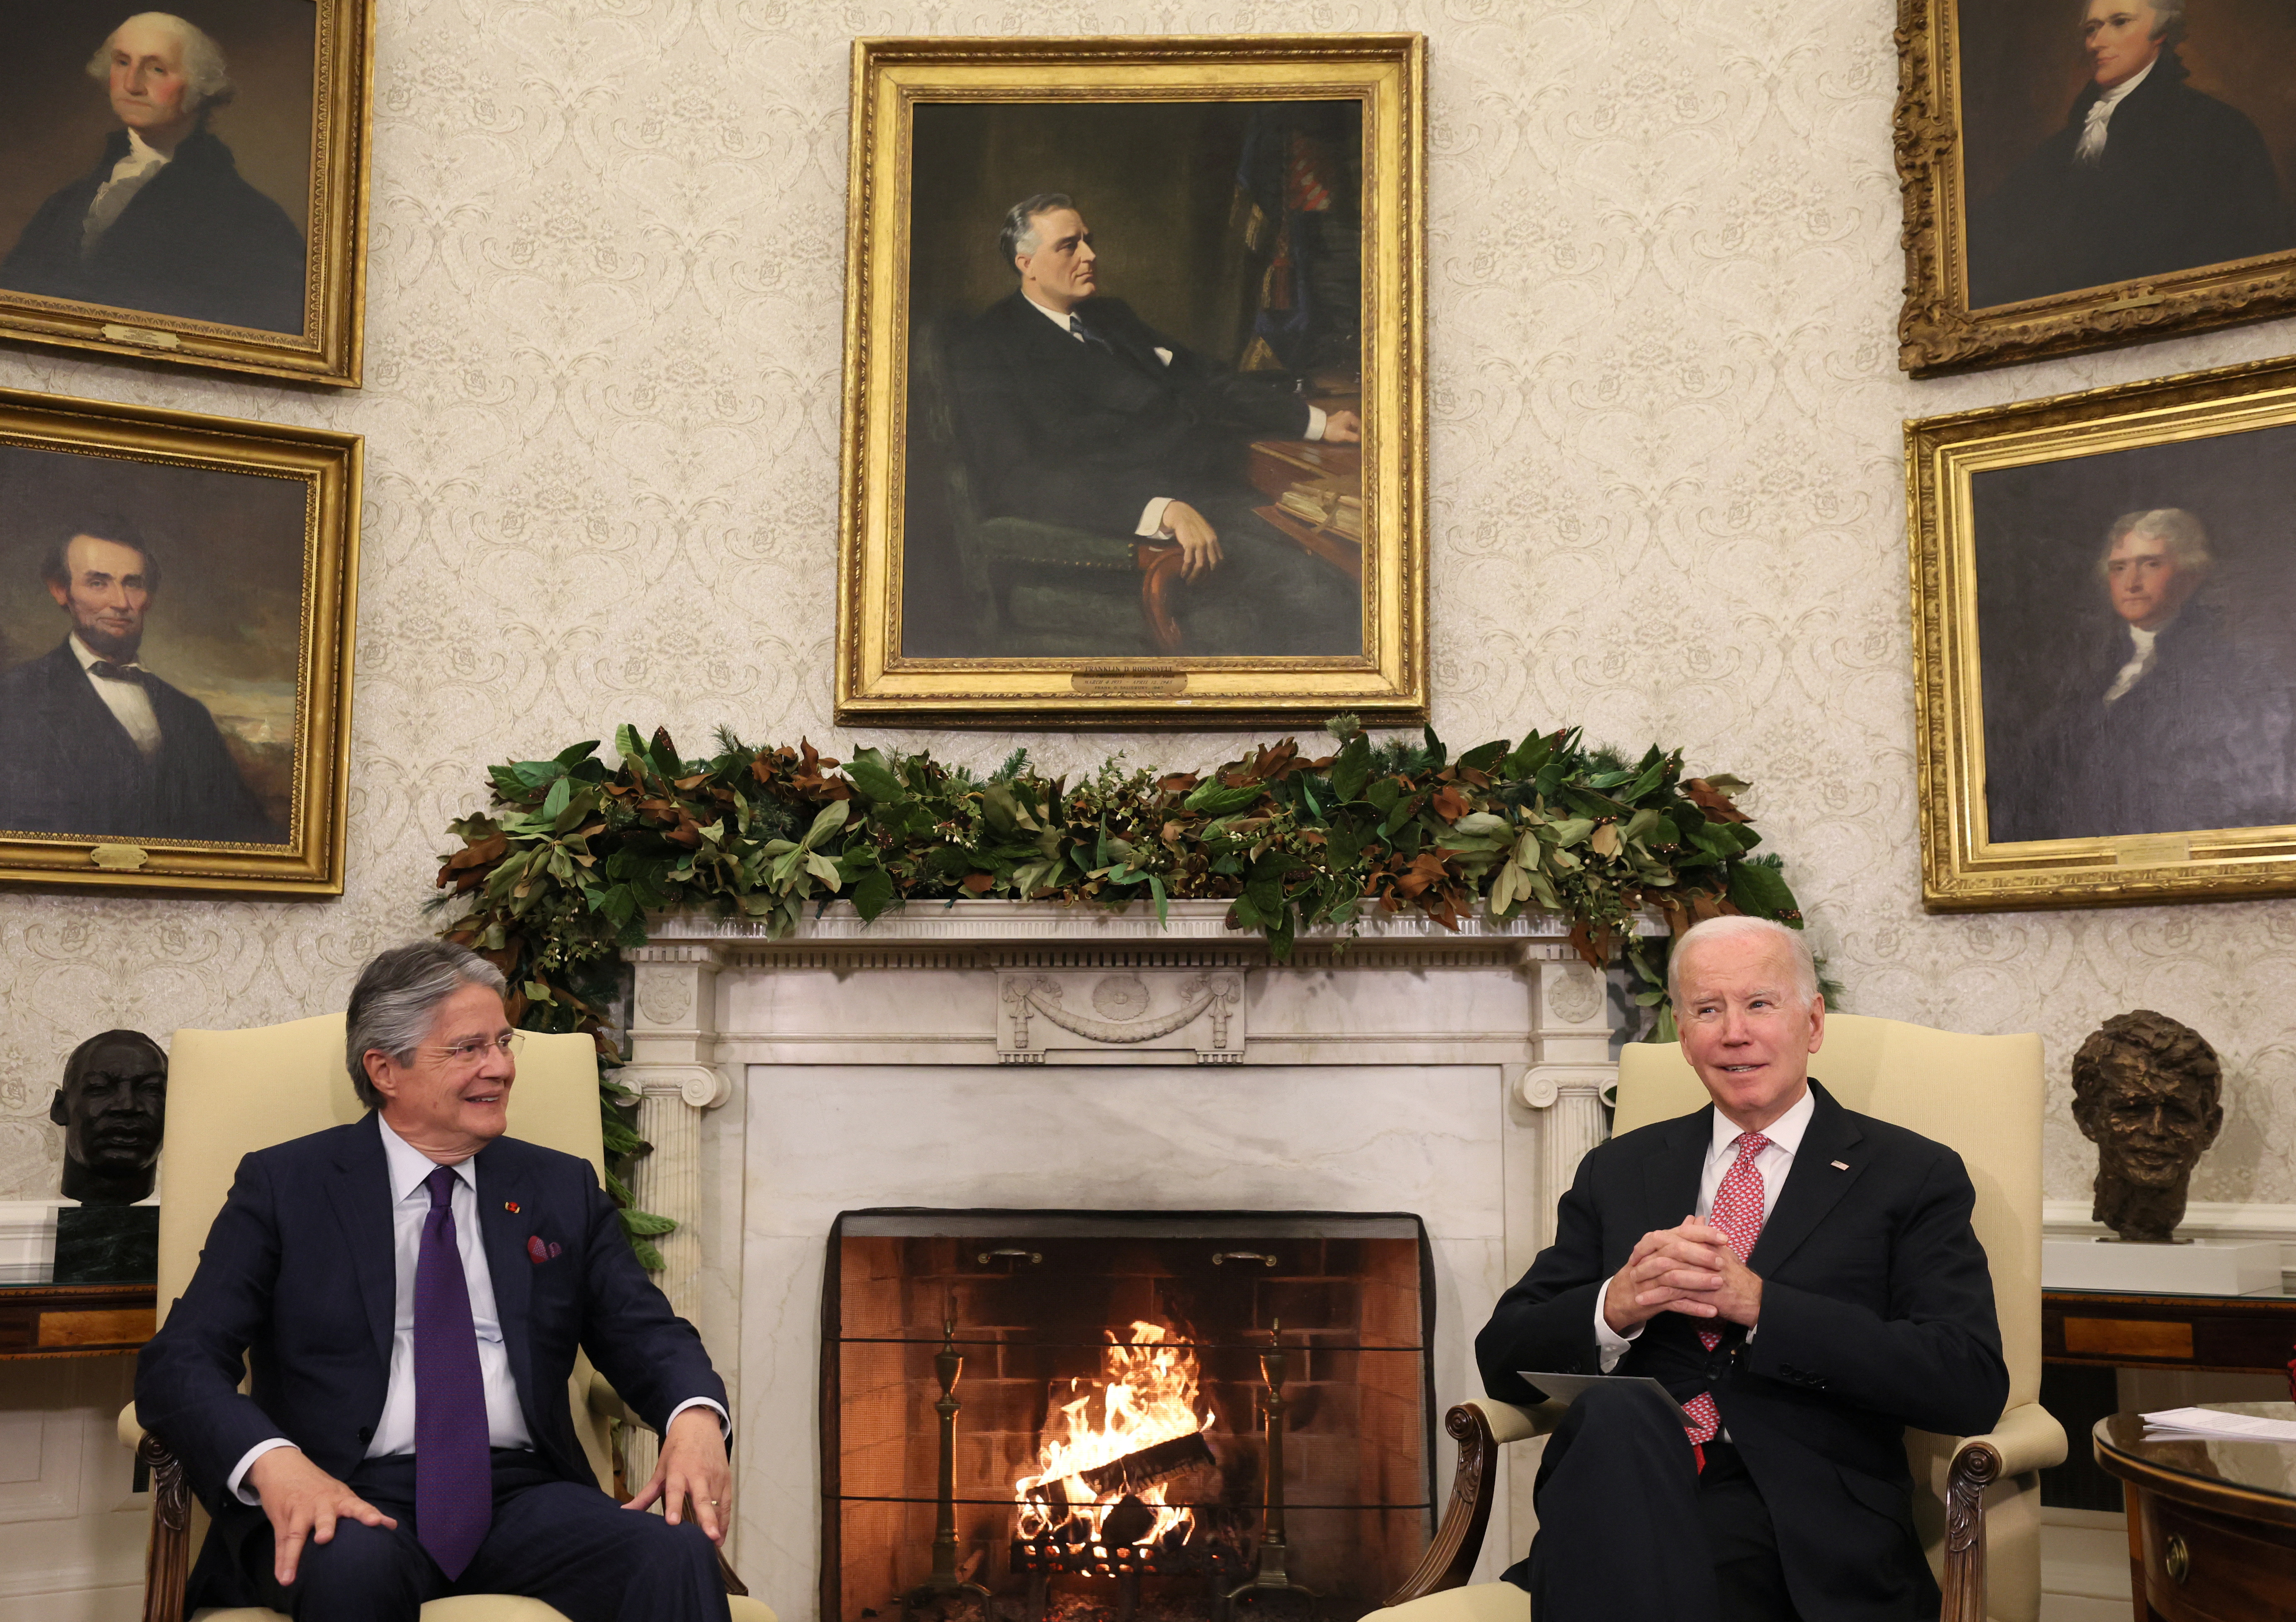 U.S. President Joe Biden meets with Ecuador President Lasso